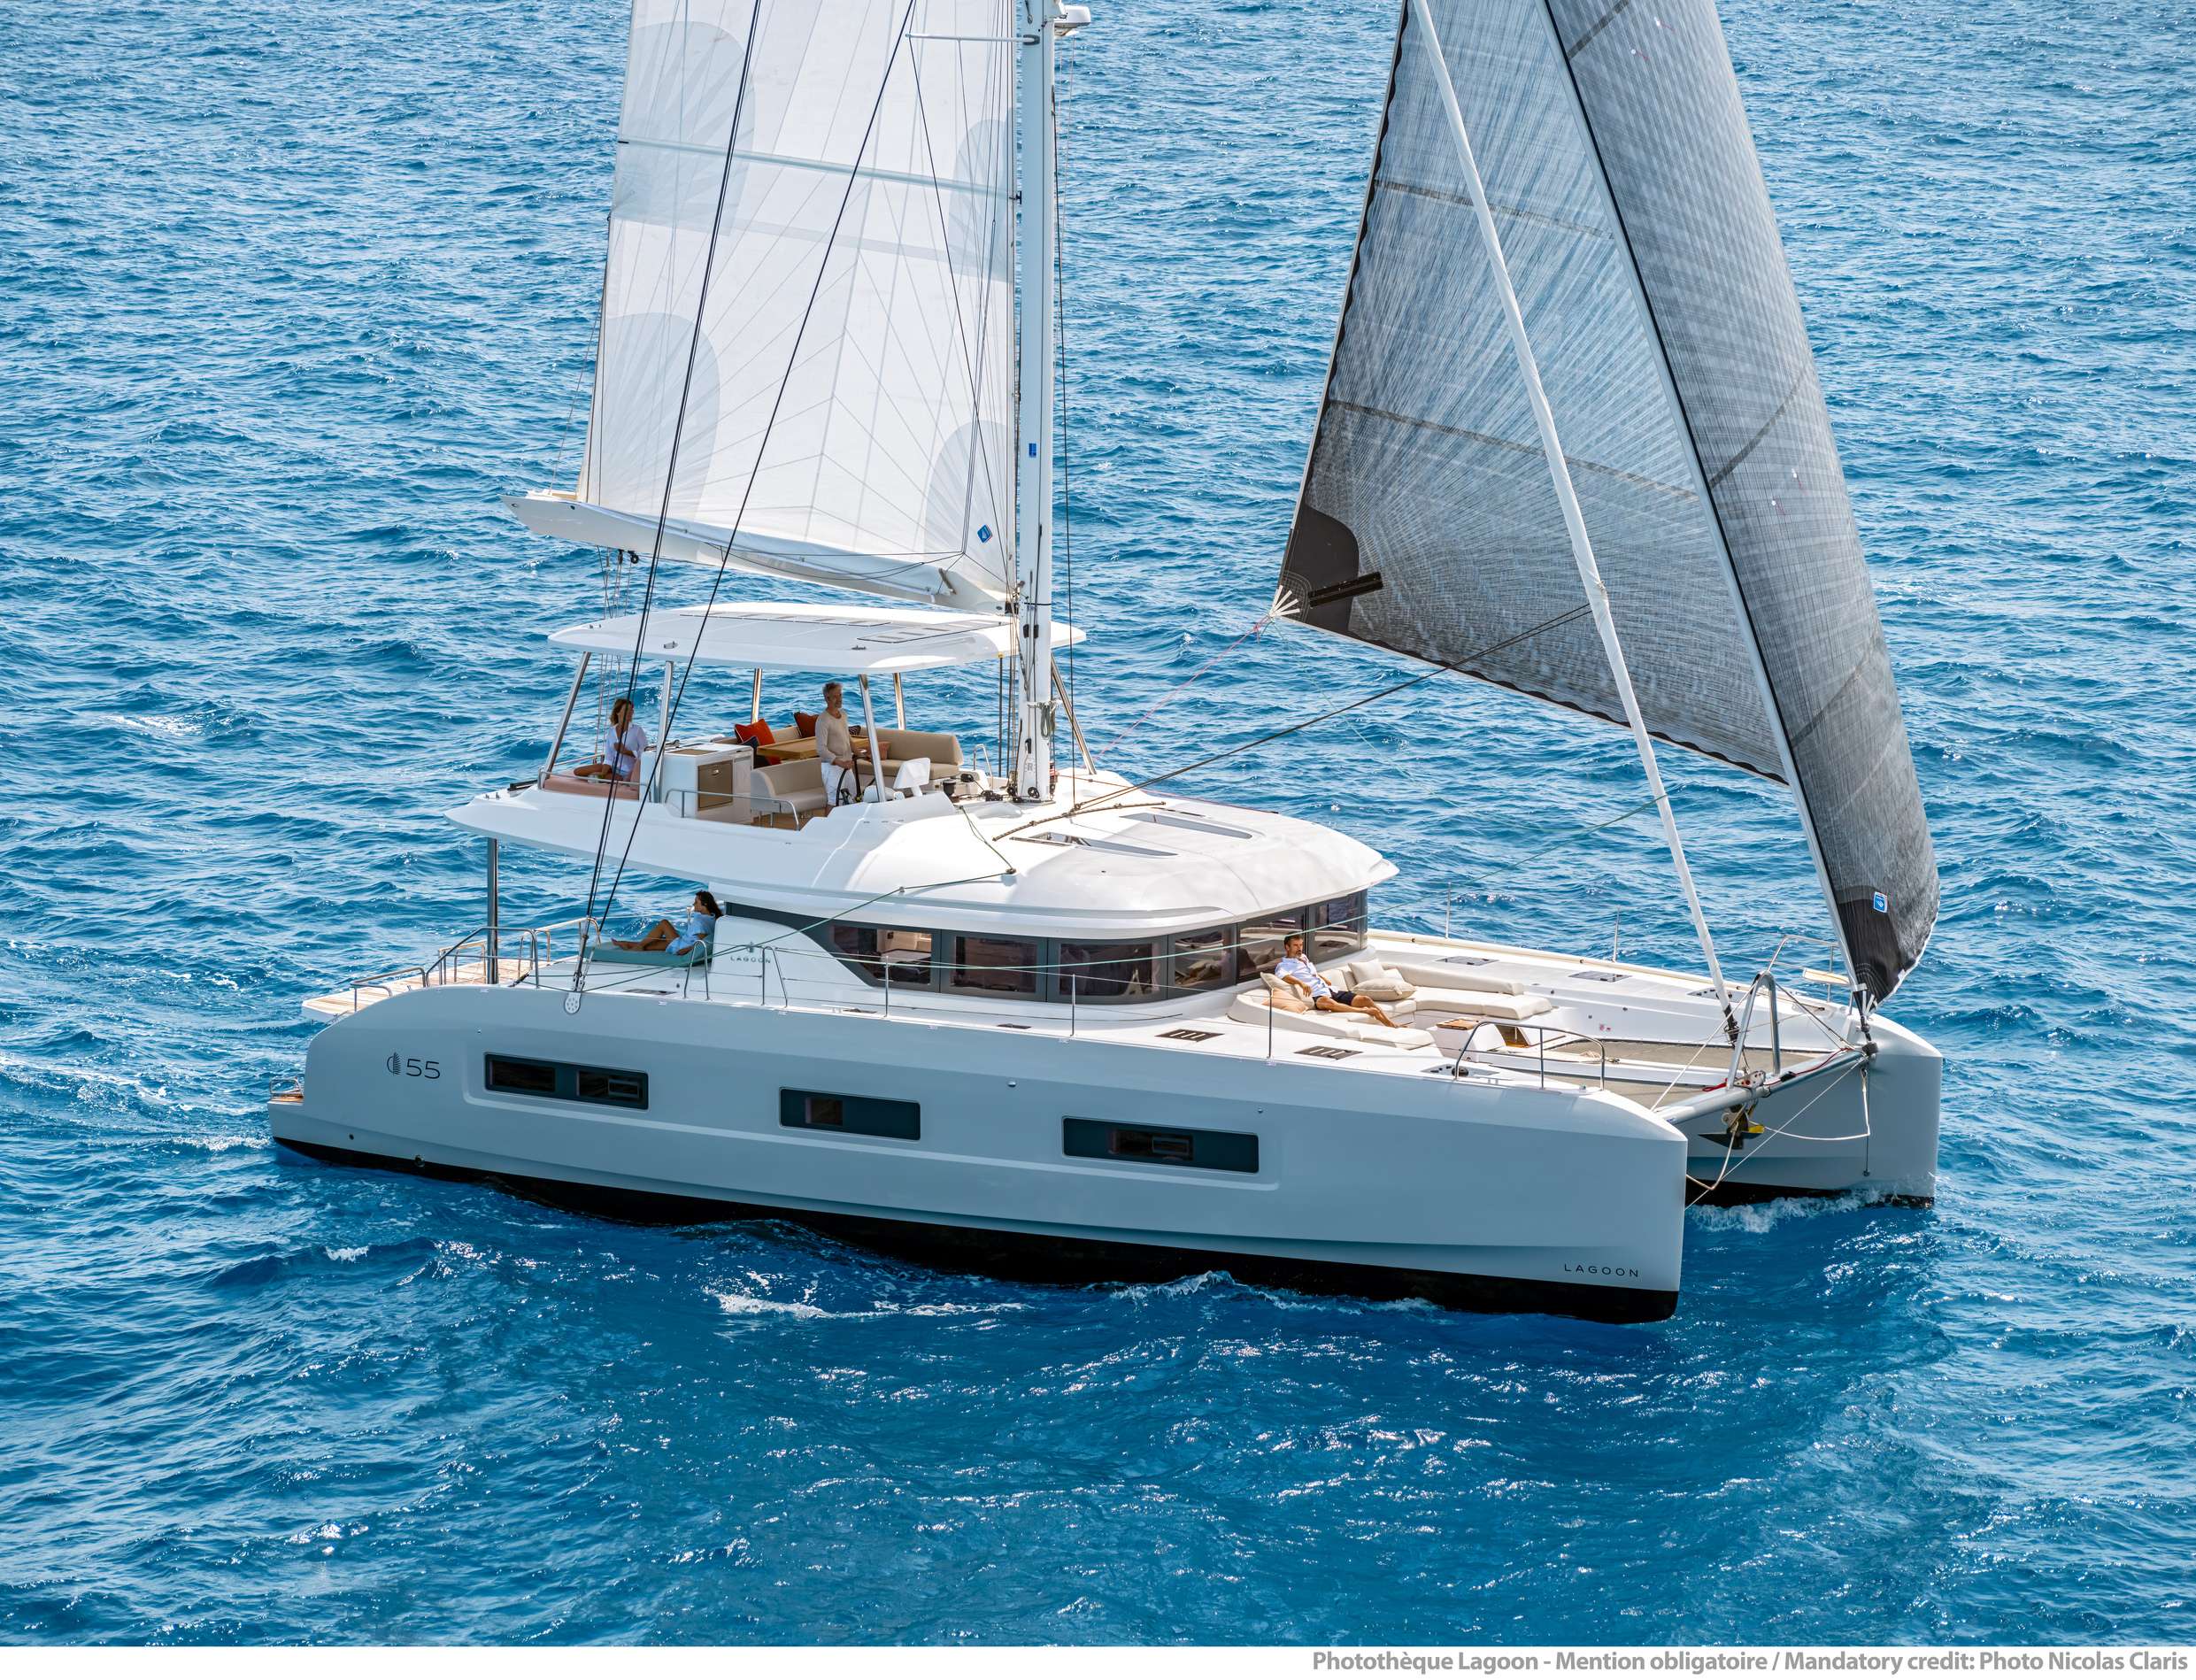 VALIUM 55 - Yacht Charter Milos & Boat hire in Greece 1